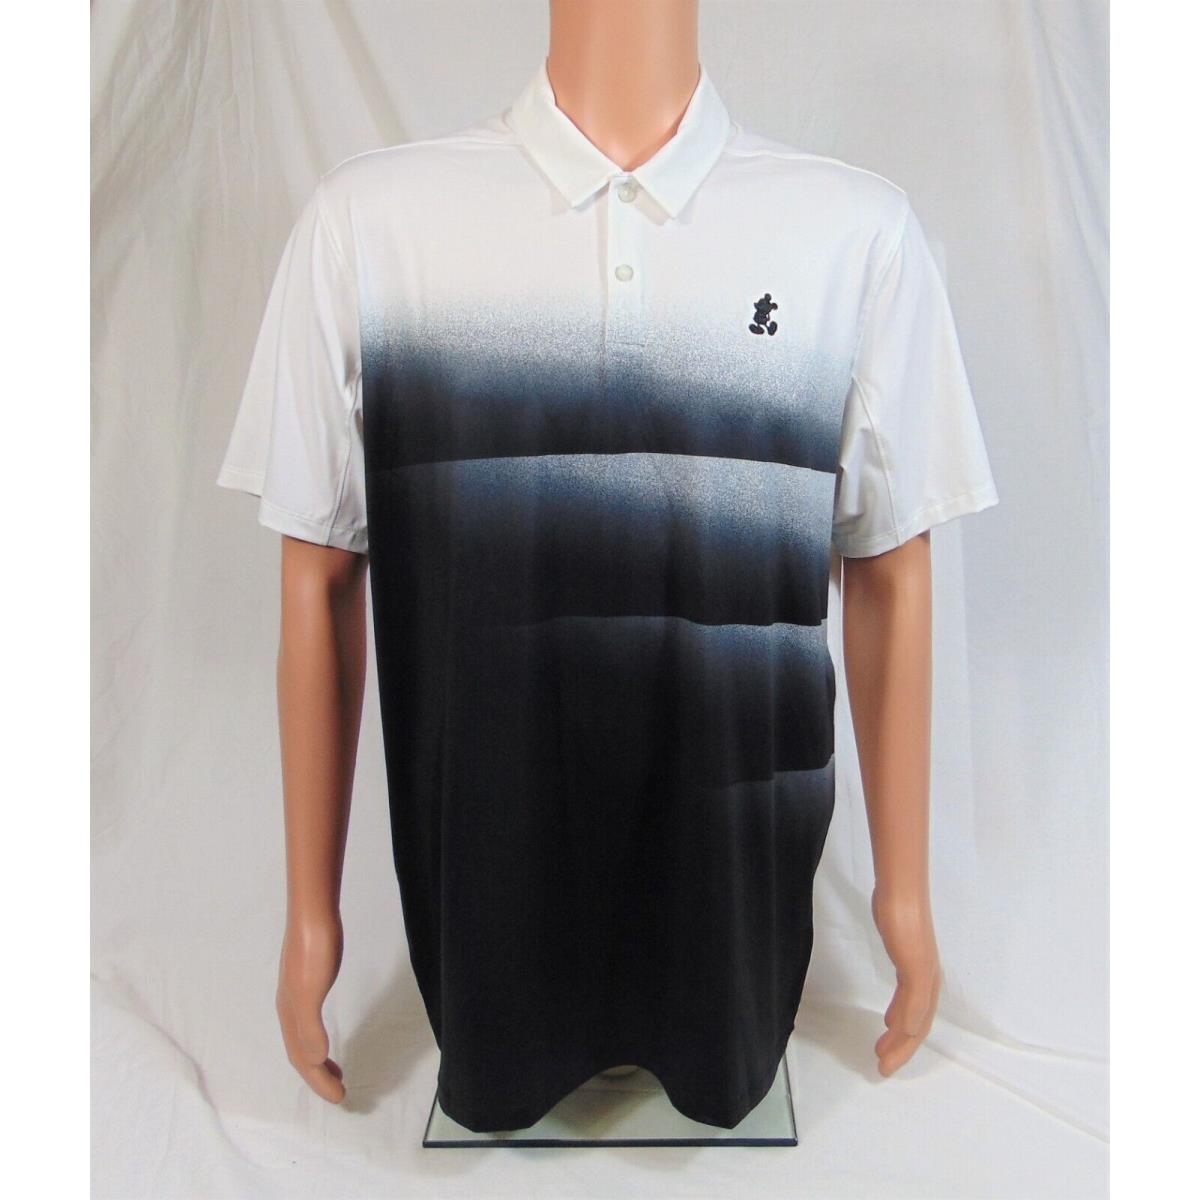 Disney Exclusive Nike Dri Fit Black Golf Polo Shirt Sz XL 854274 103 Rare